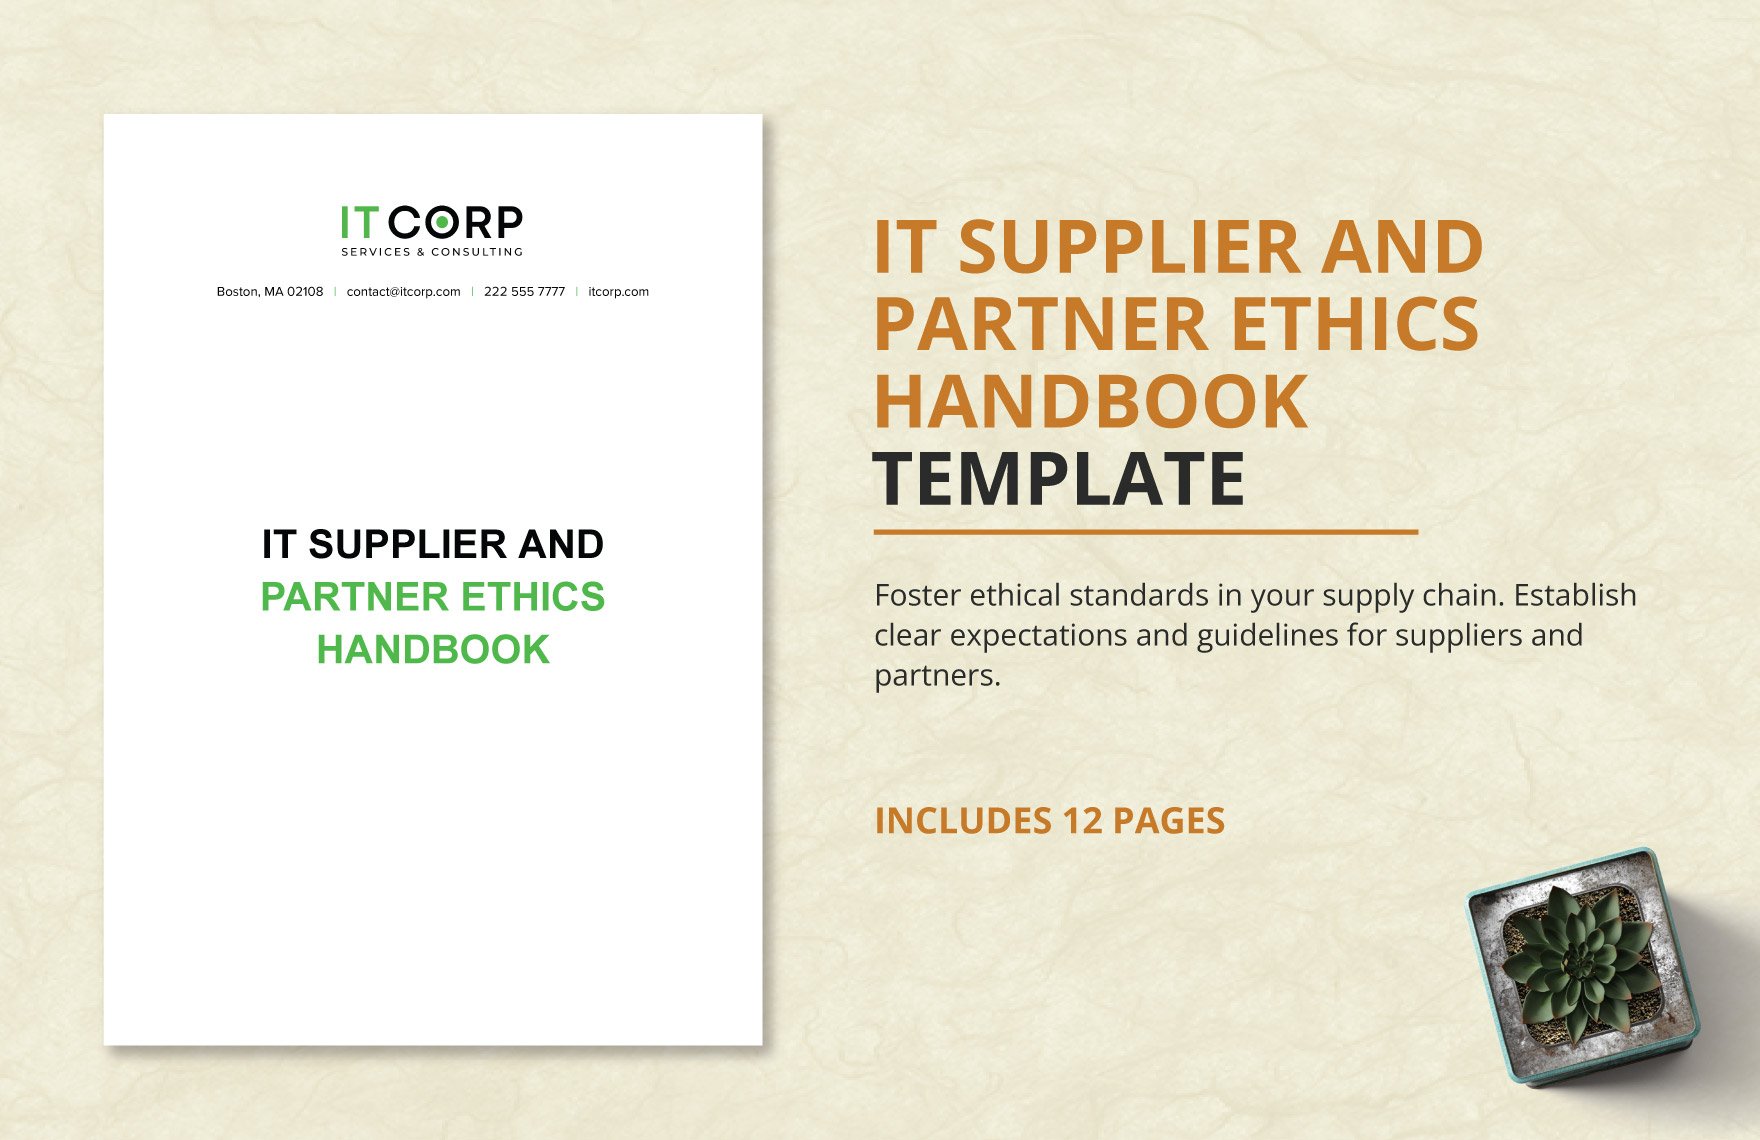 IT Supplier and Partner Ethics Handbook Template